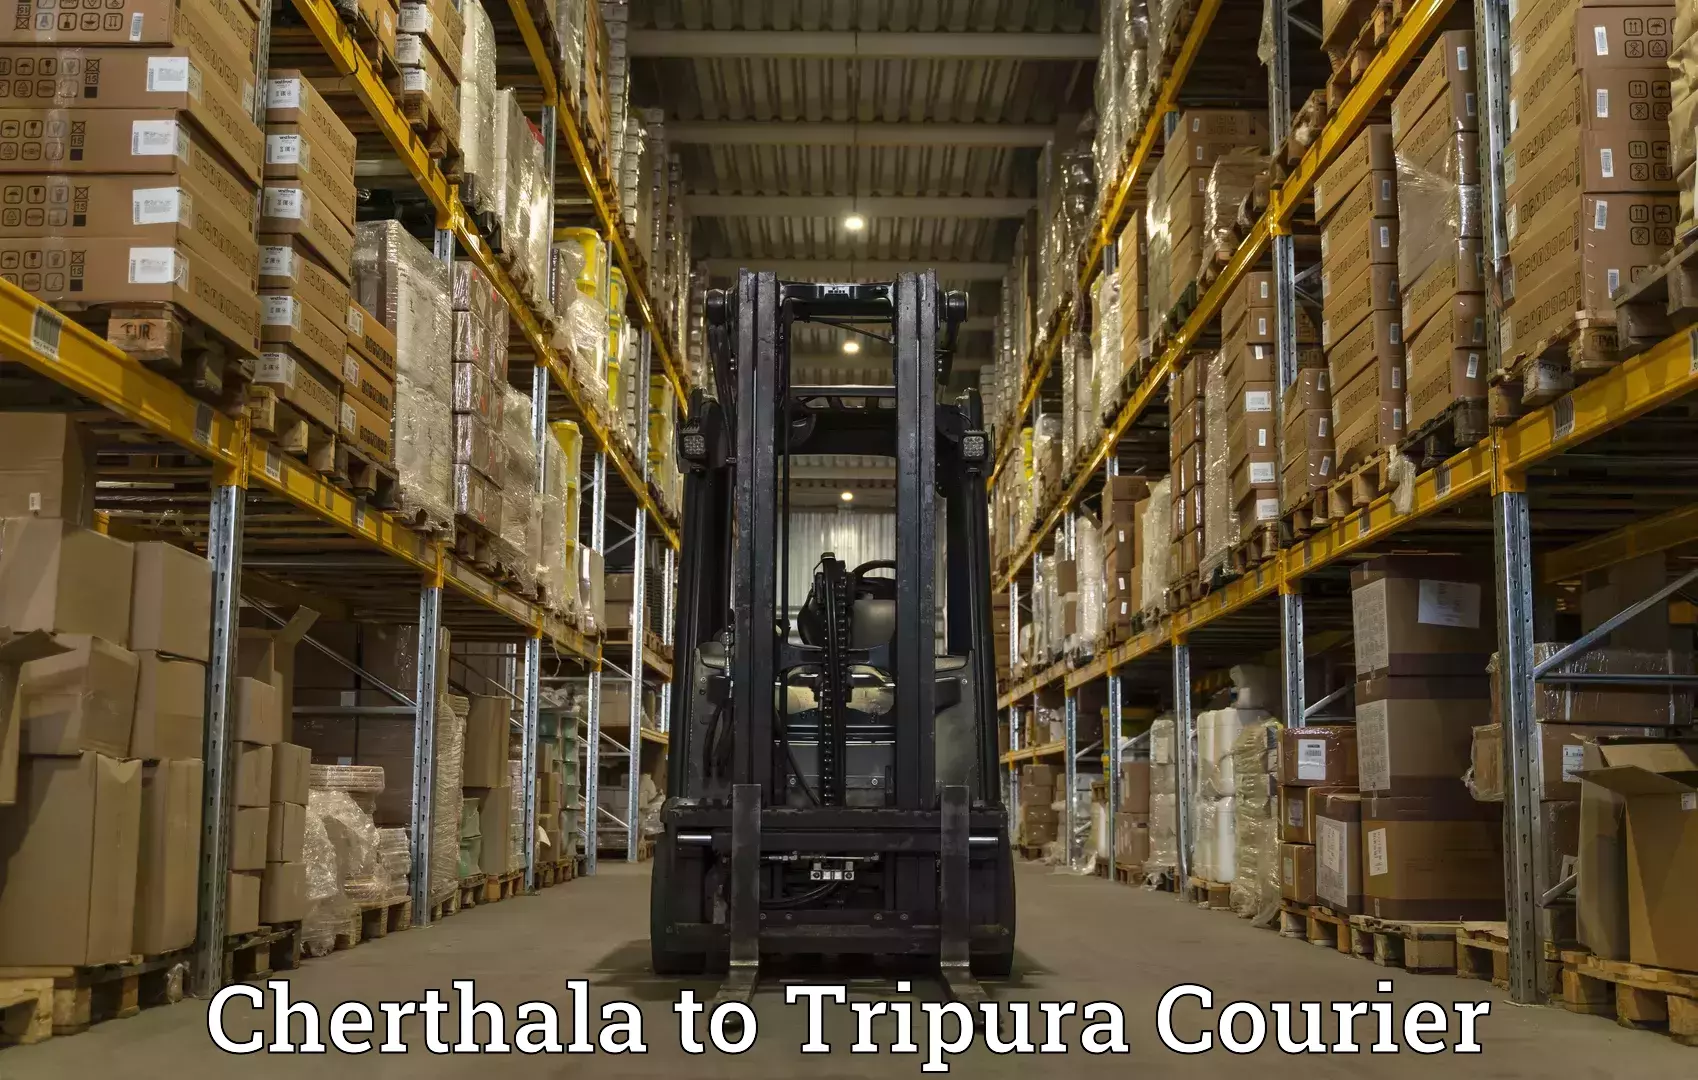 Courier service comparison in Cherthala to South Tripura